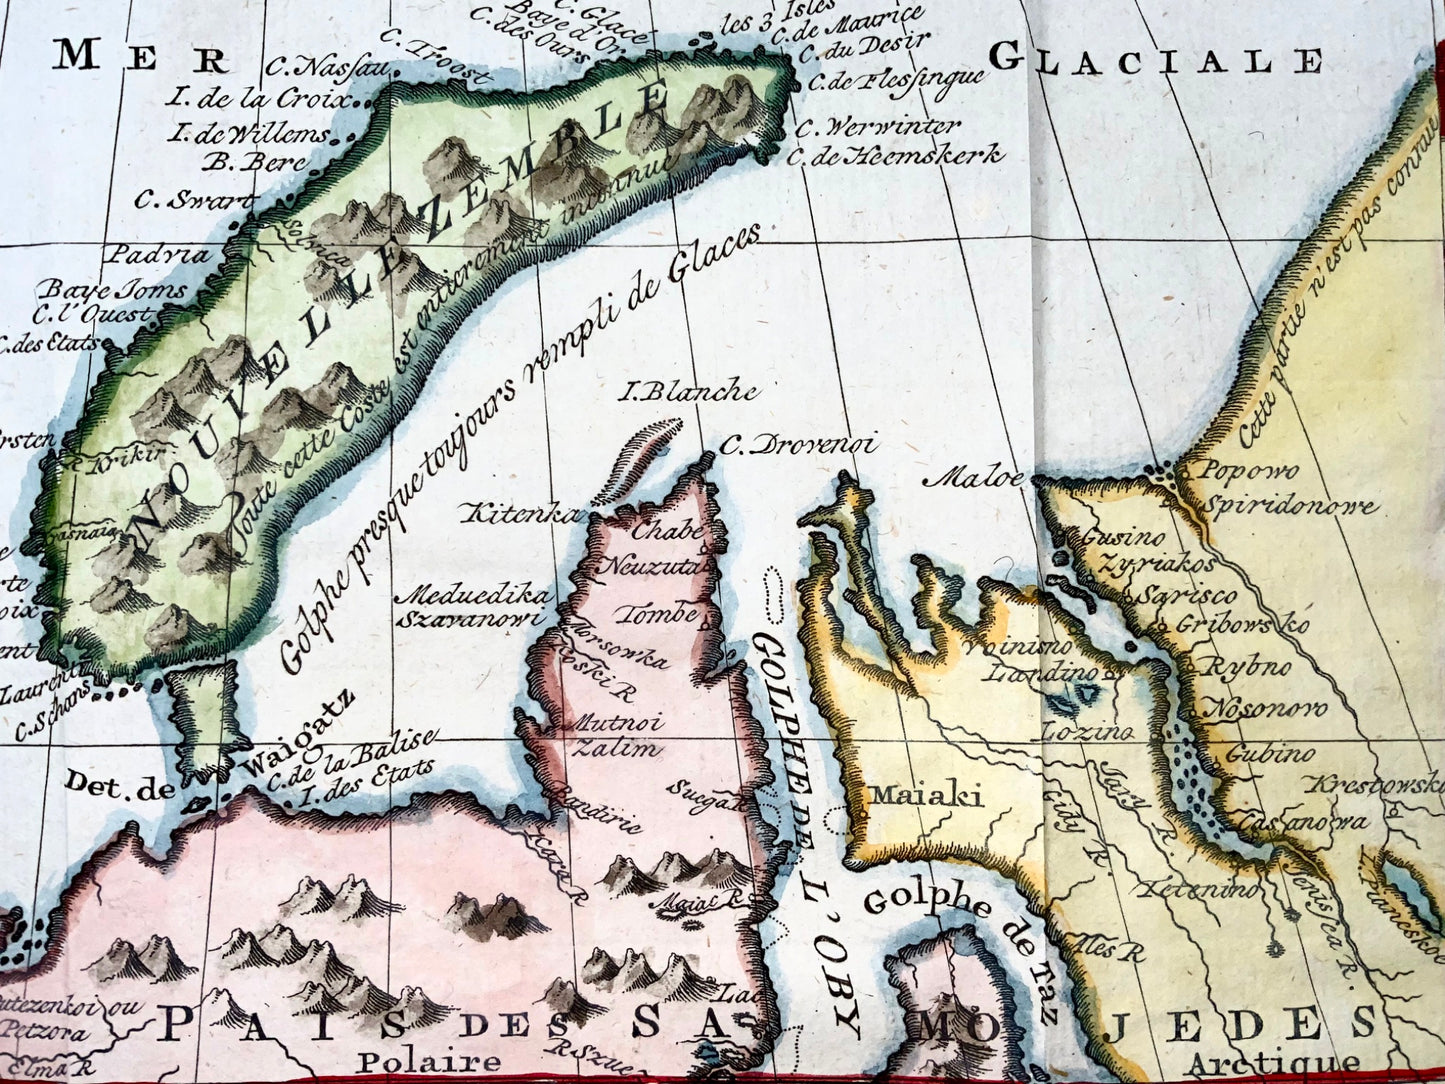 1757 Russia settentrionale, Novaya Zemlya, Samoiedi e Ostiac, incisione su rame, mappa